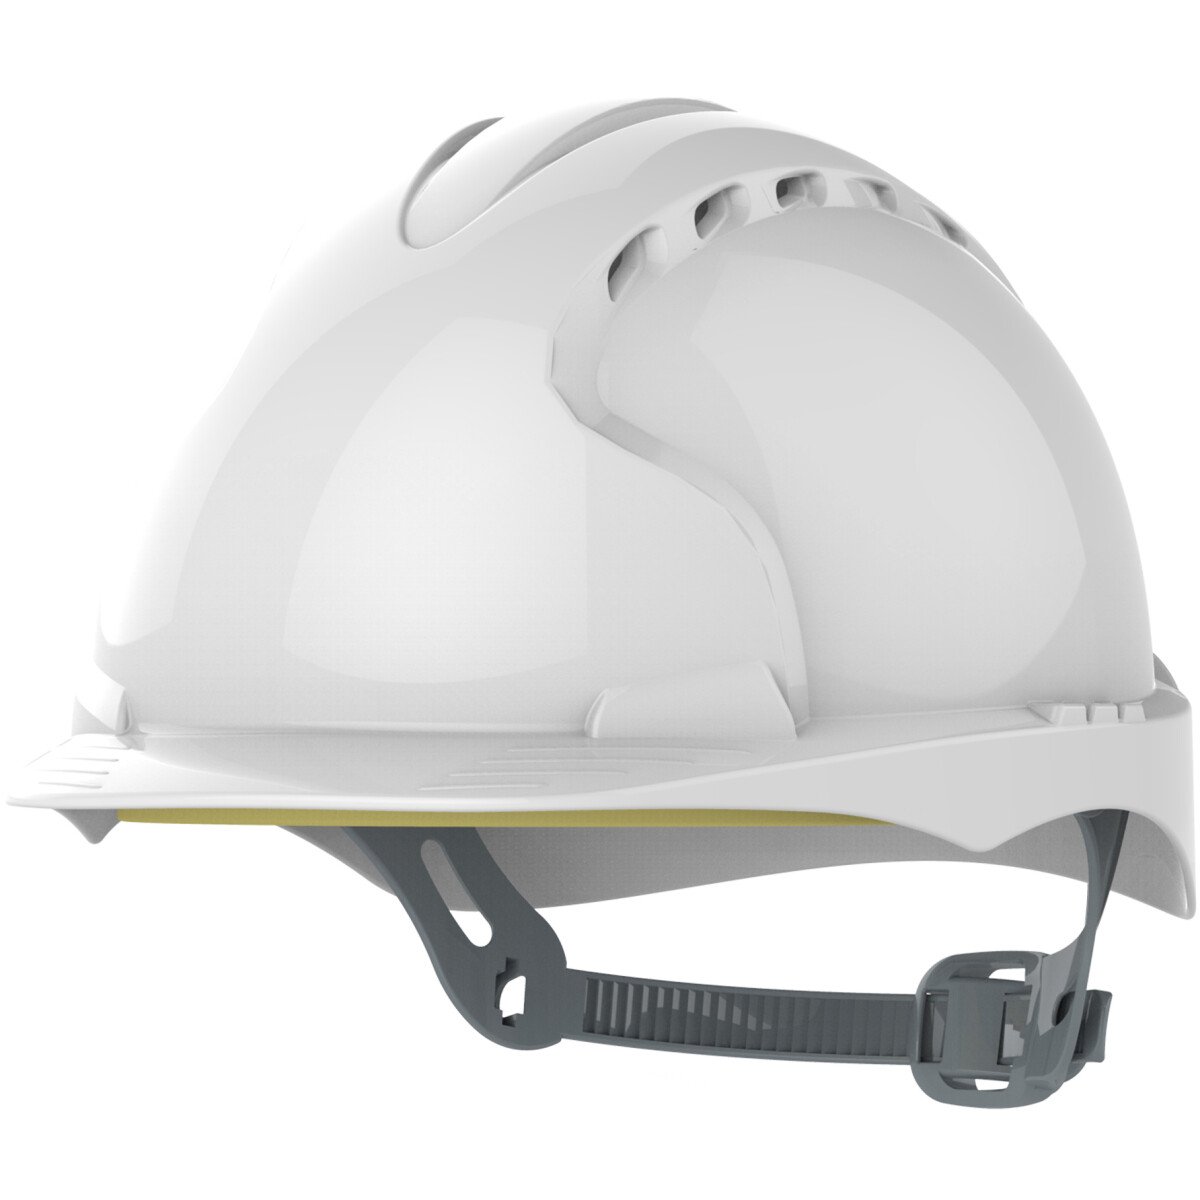 JSP Evo 2 Vented Standard Peak One Touch Safety Helmet White